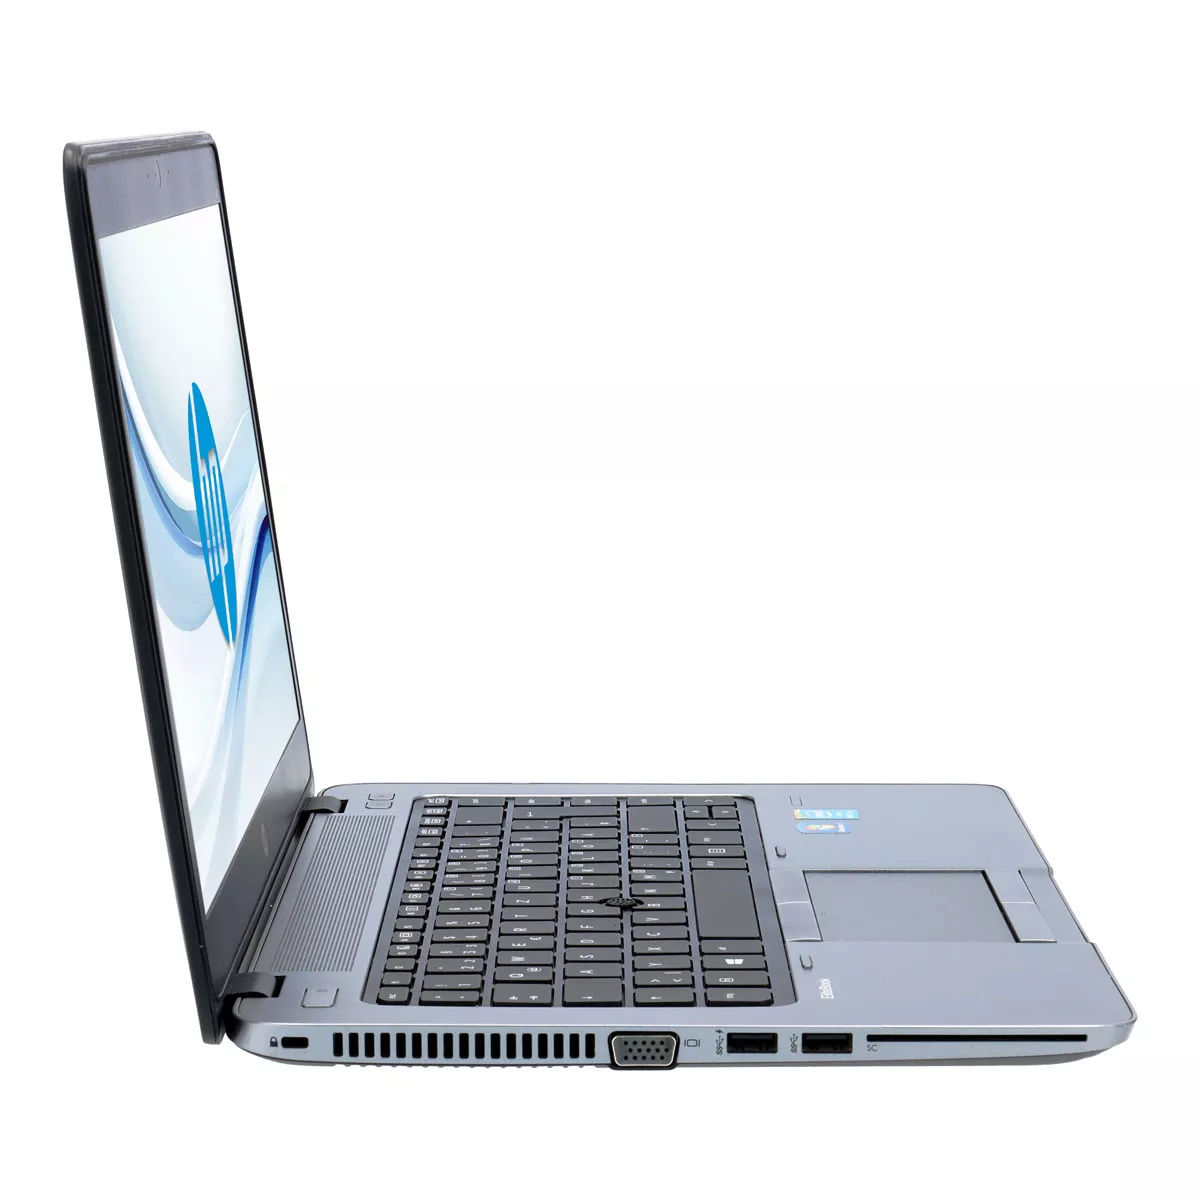 HP EliteBook 840 G2 Core i5 5300U 8 GB 240 GB SSD A+